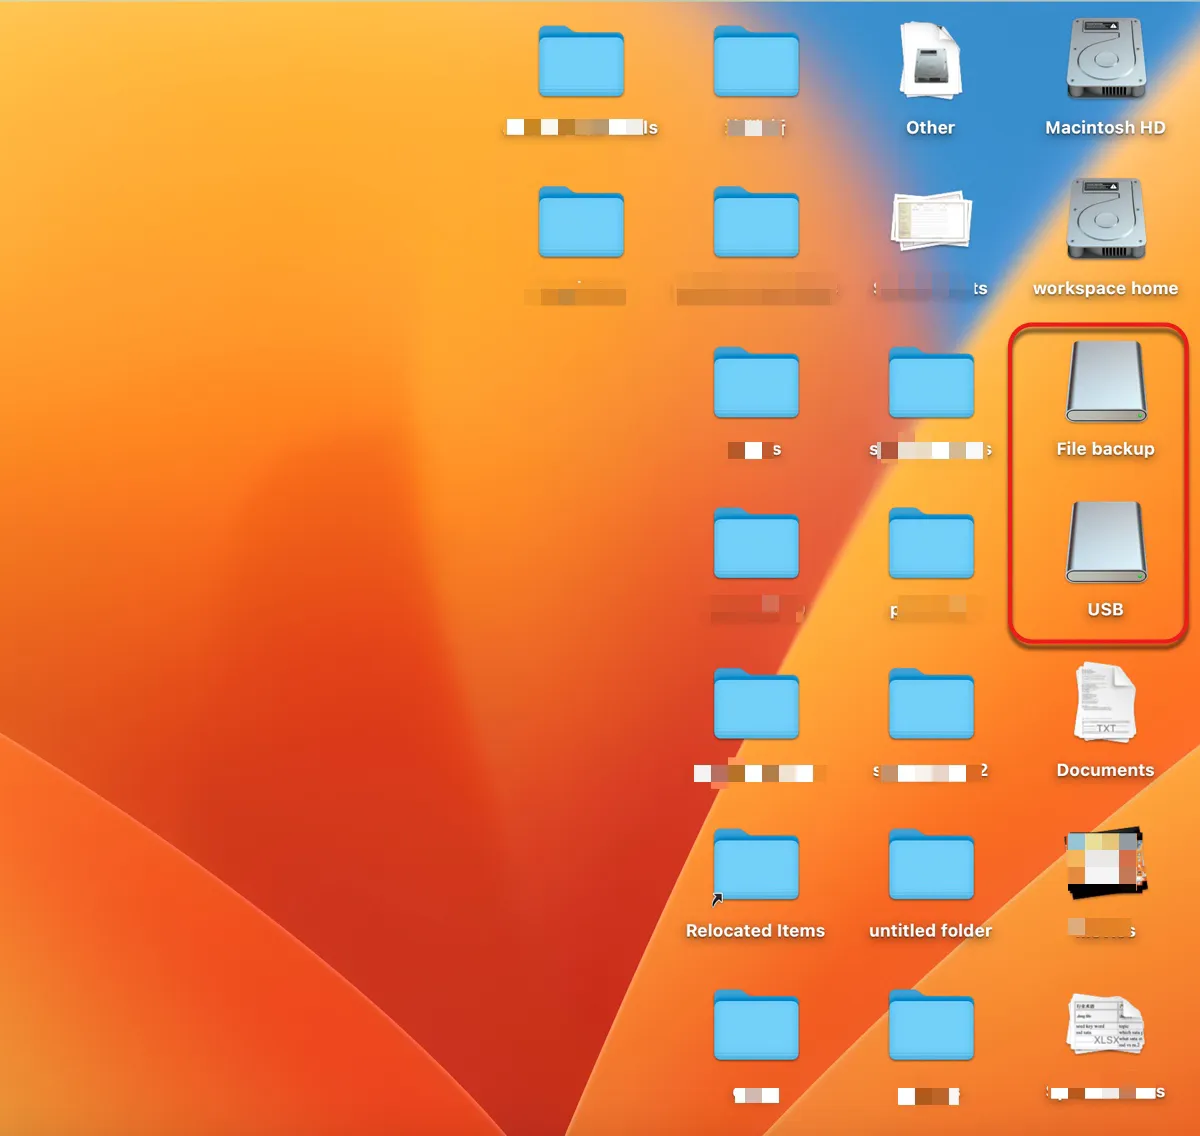 View USB devices on Mac desktop